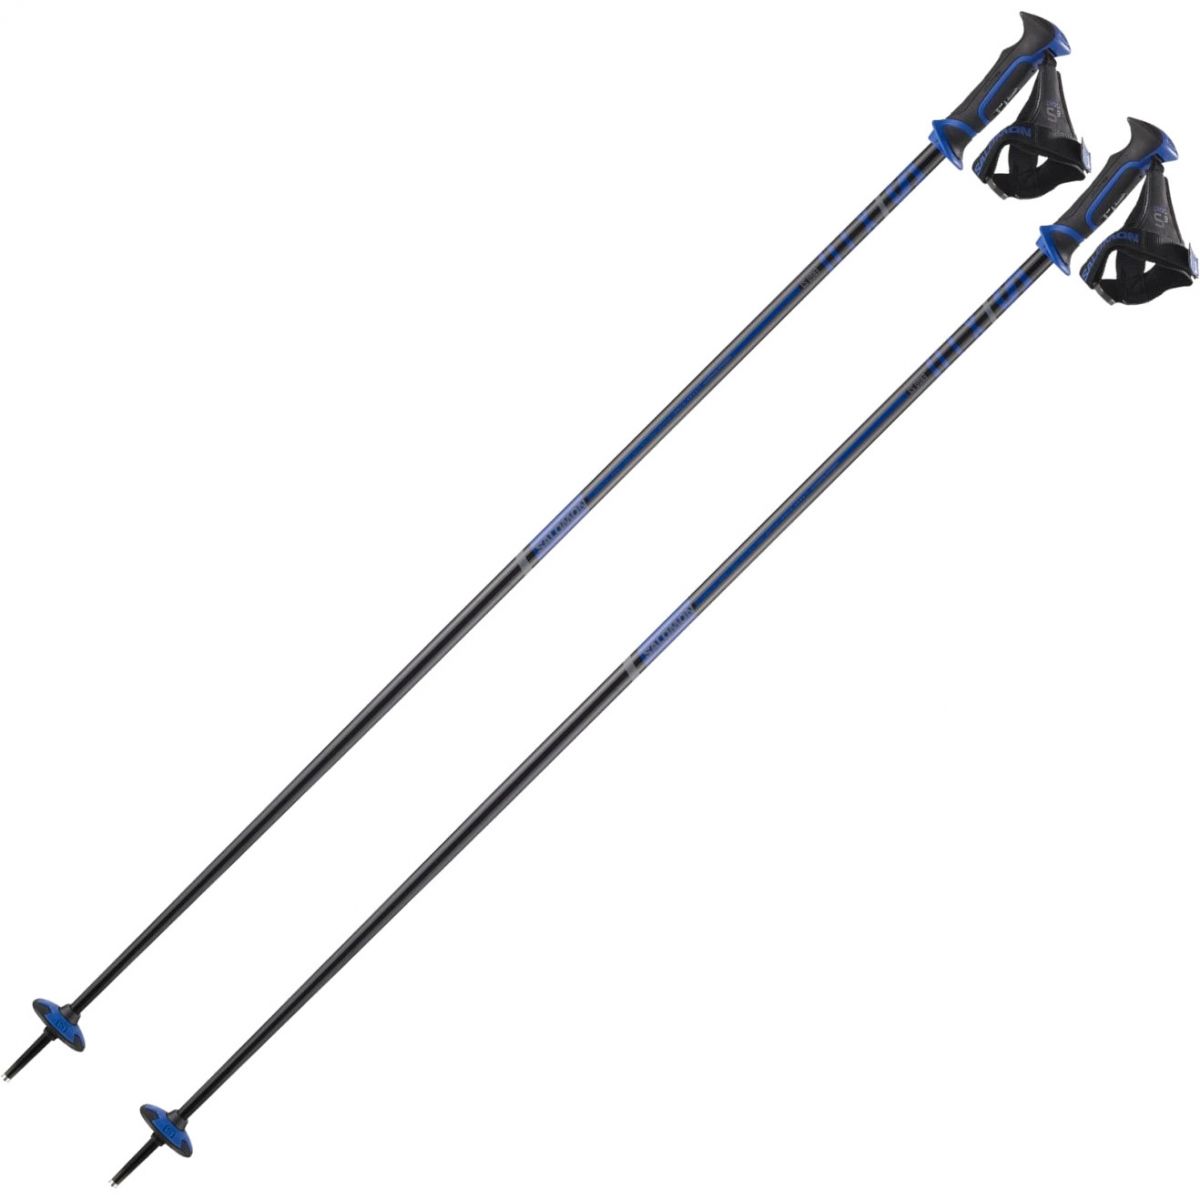 Salomon X10 Ergo S3, ski poles, black/blue